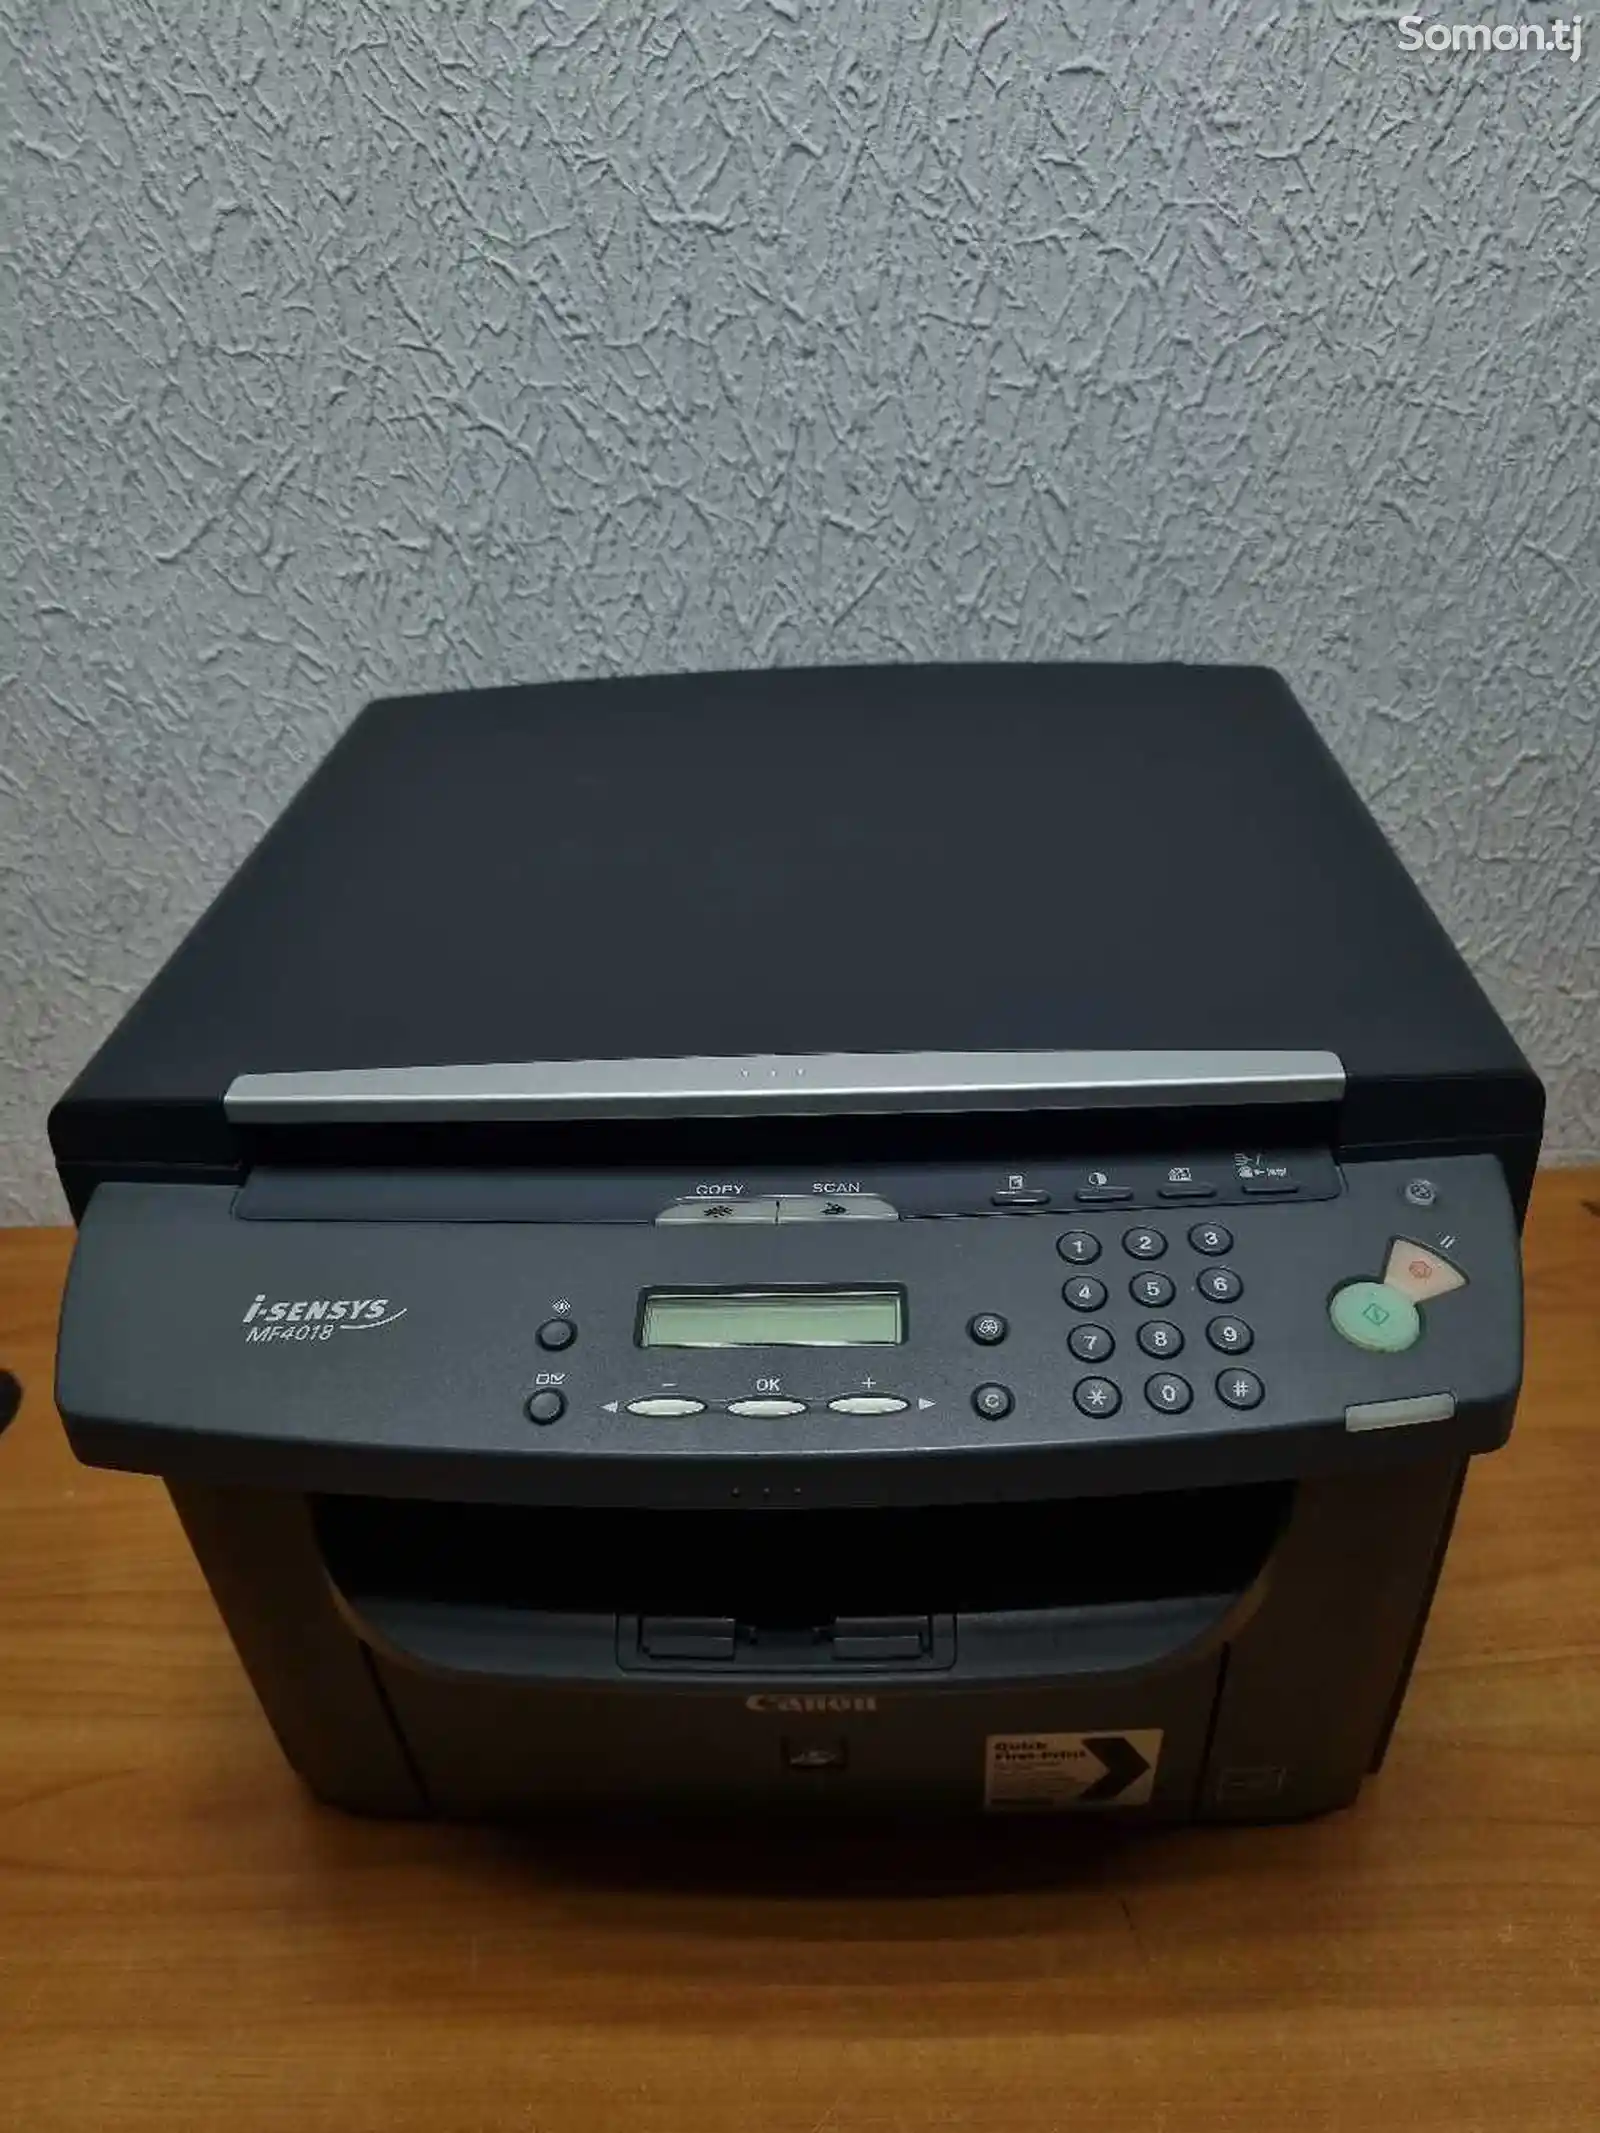 Принтер Canon MF4018 dn 3 в 1-1